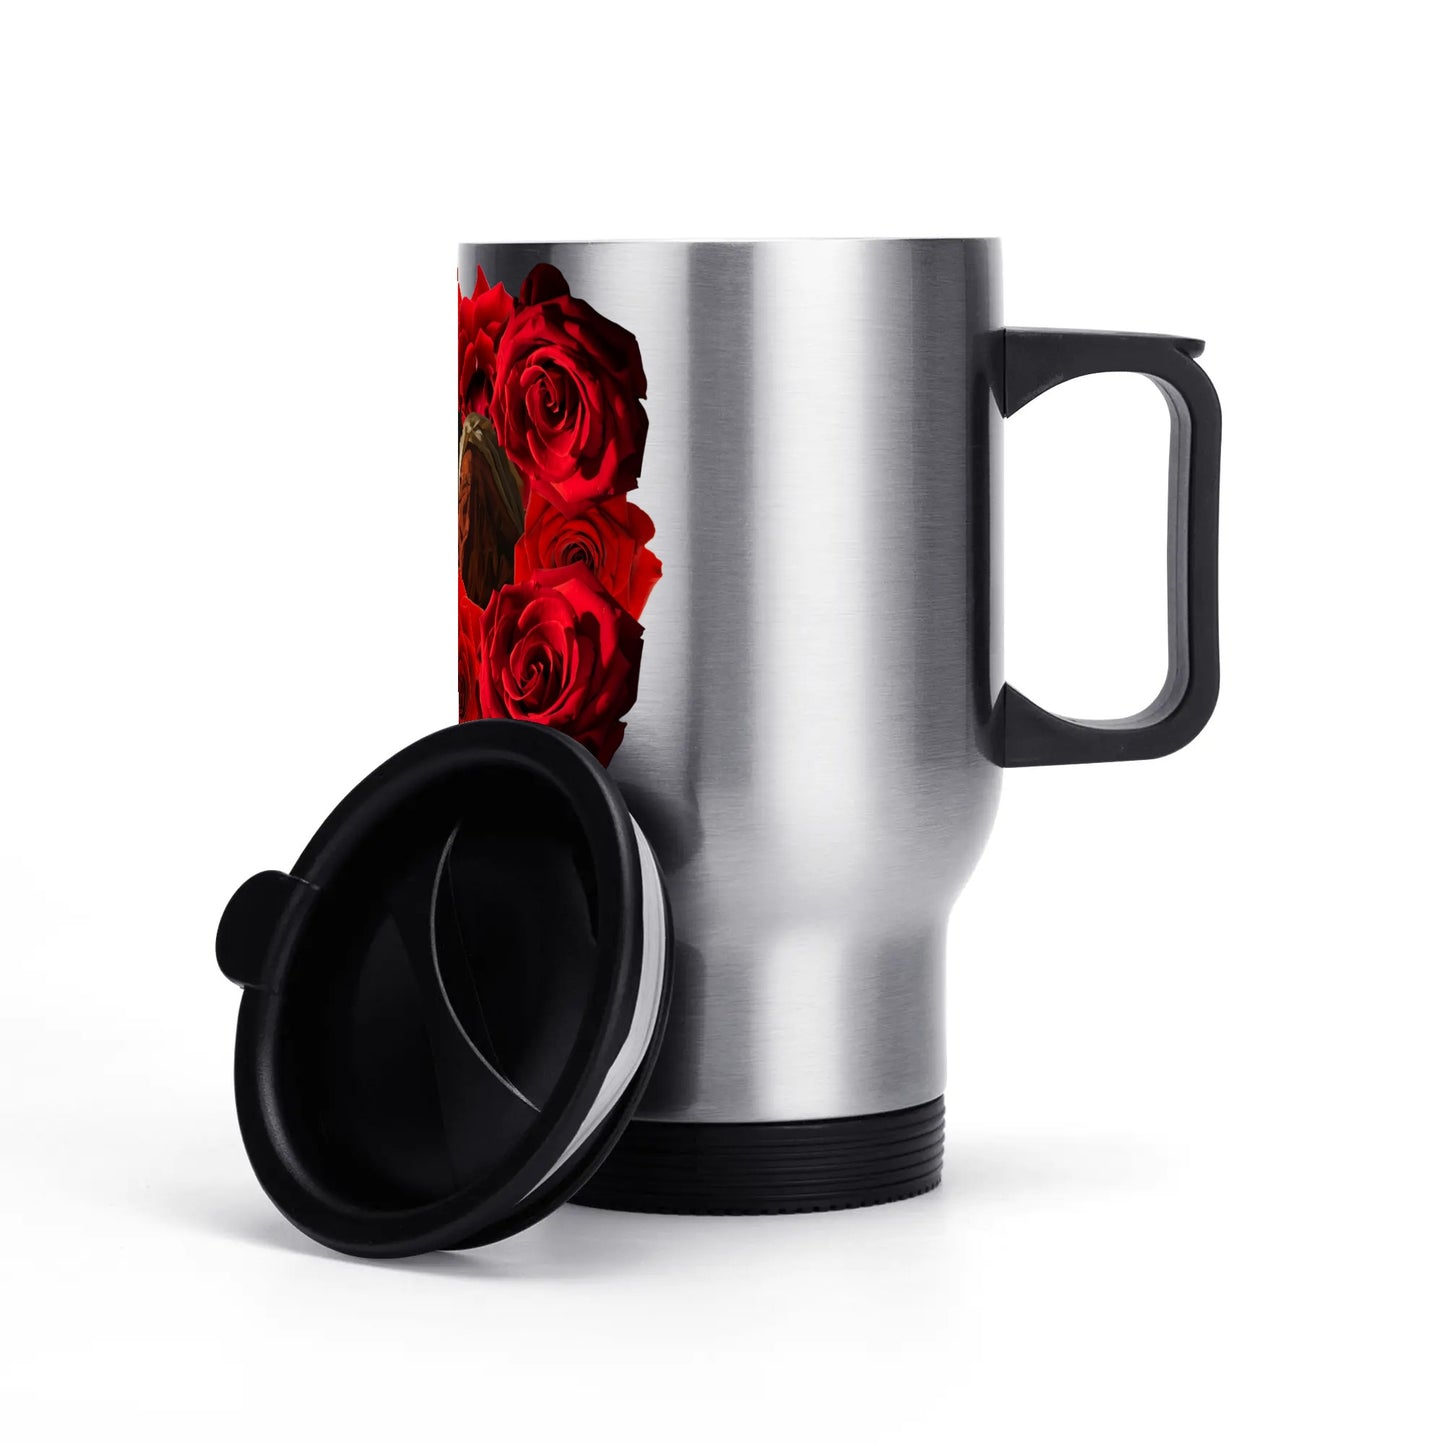 Jesus- Stainless Steel Travel Coffee Mug (14 oz)